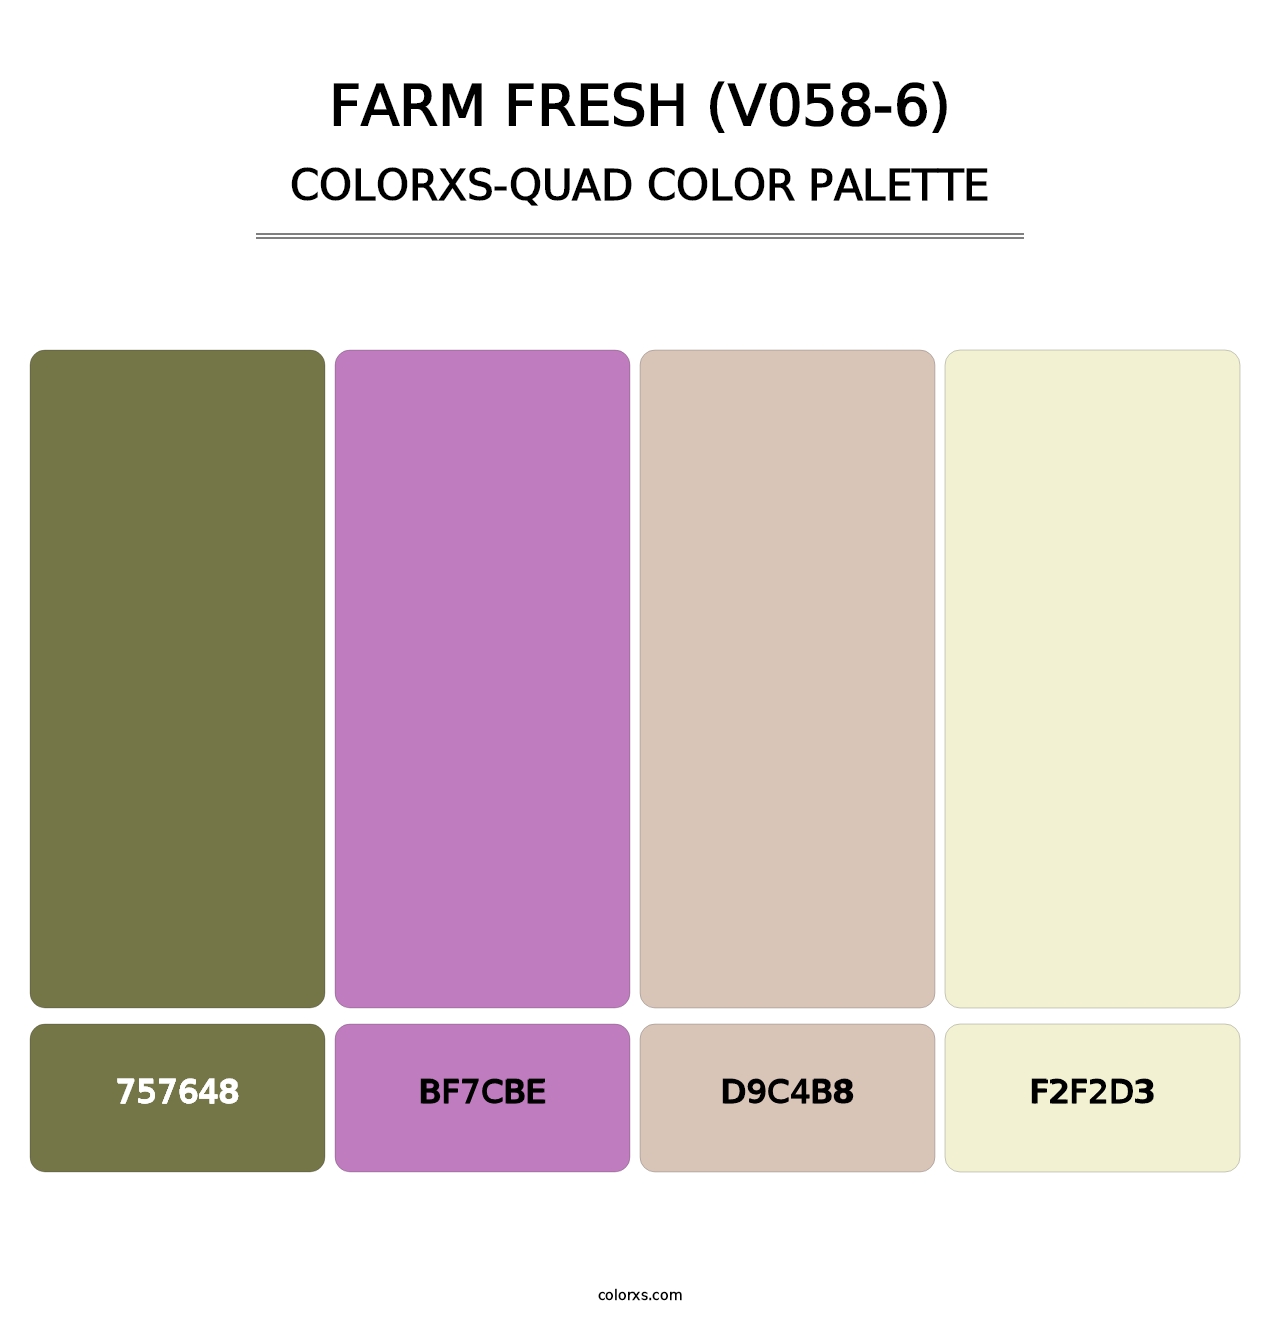 Farm Fresh (V058-6) - Colorxs Quad Palette